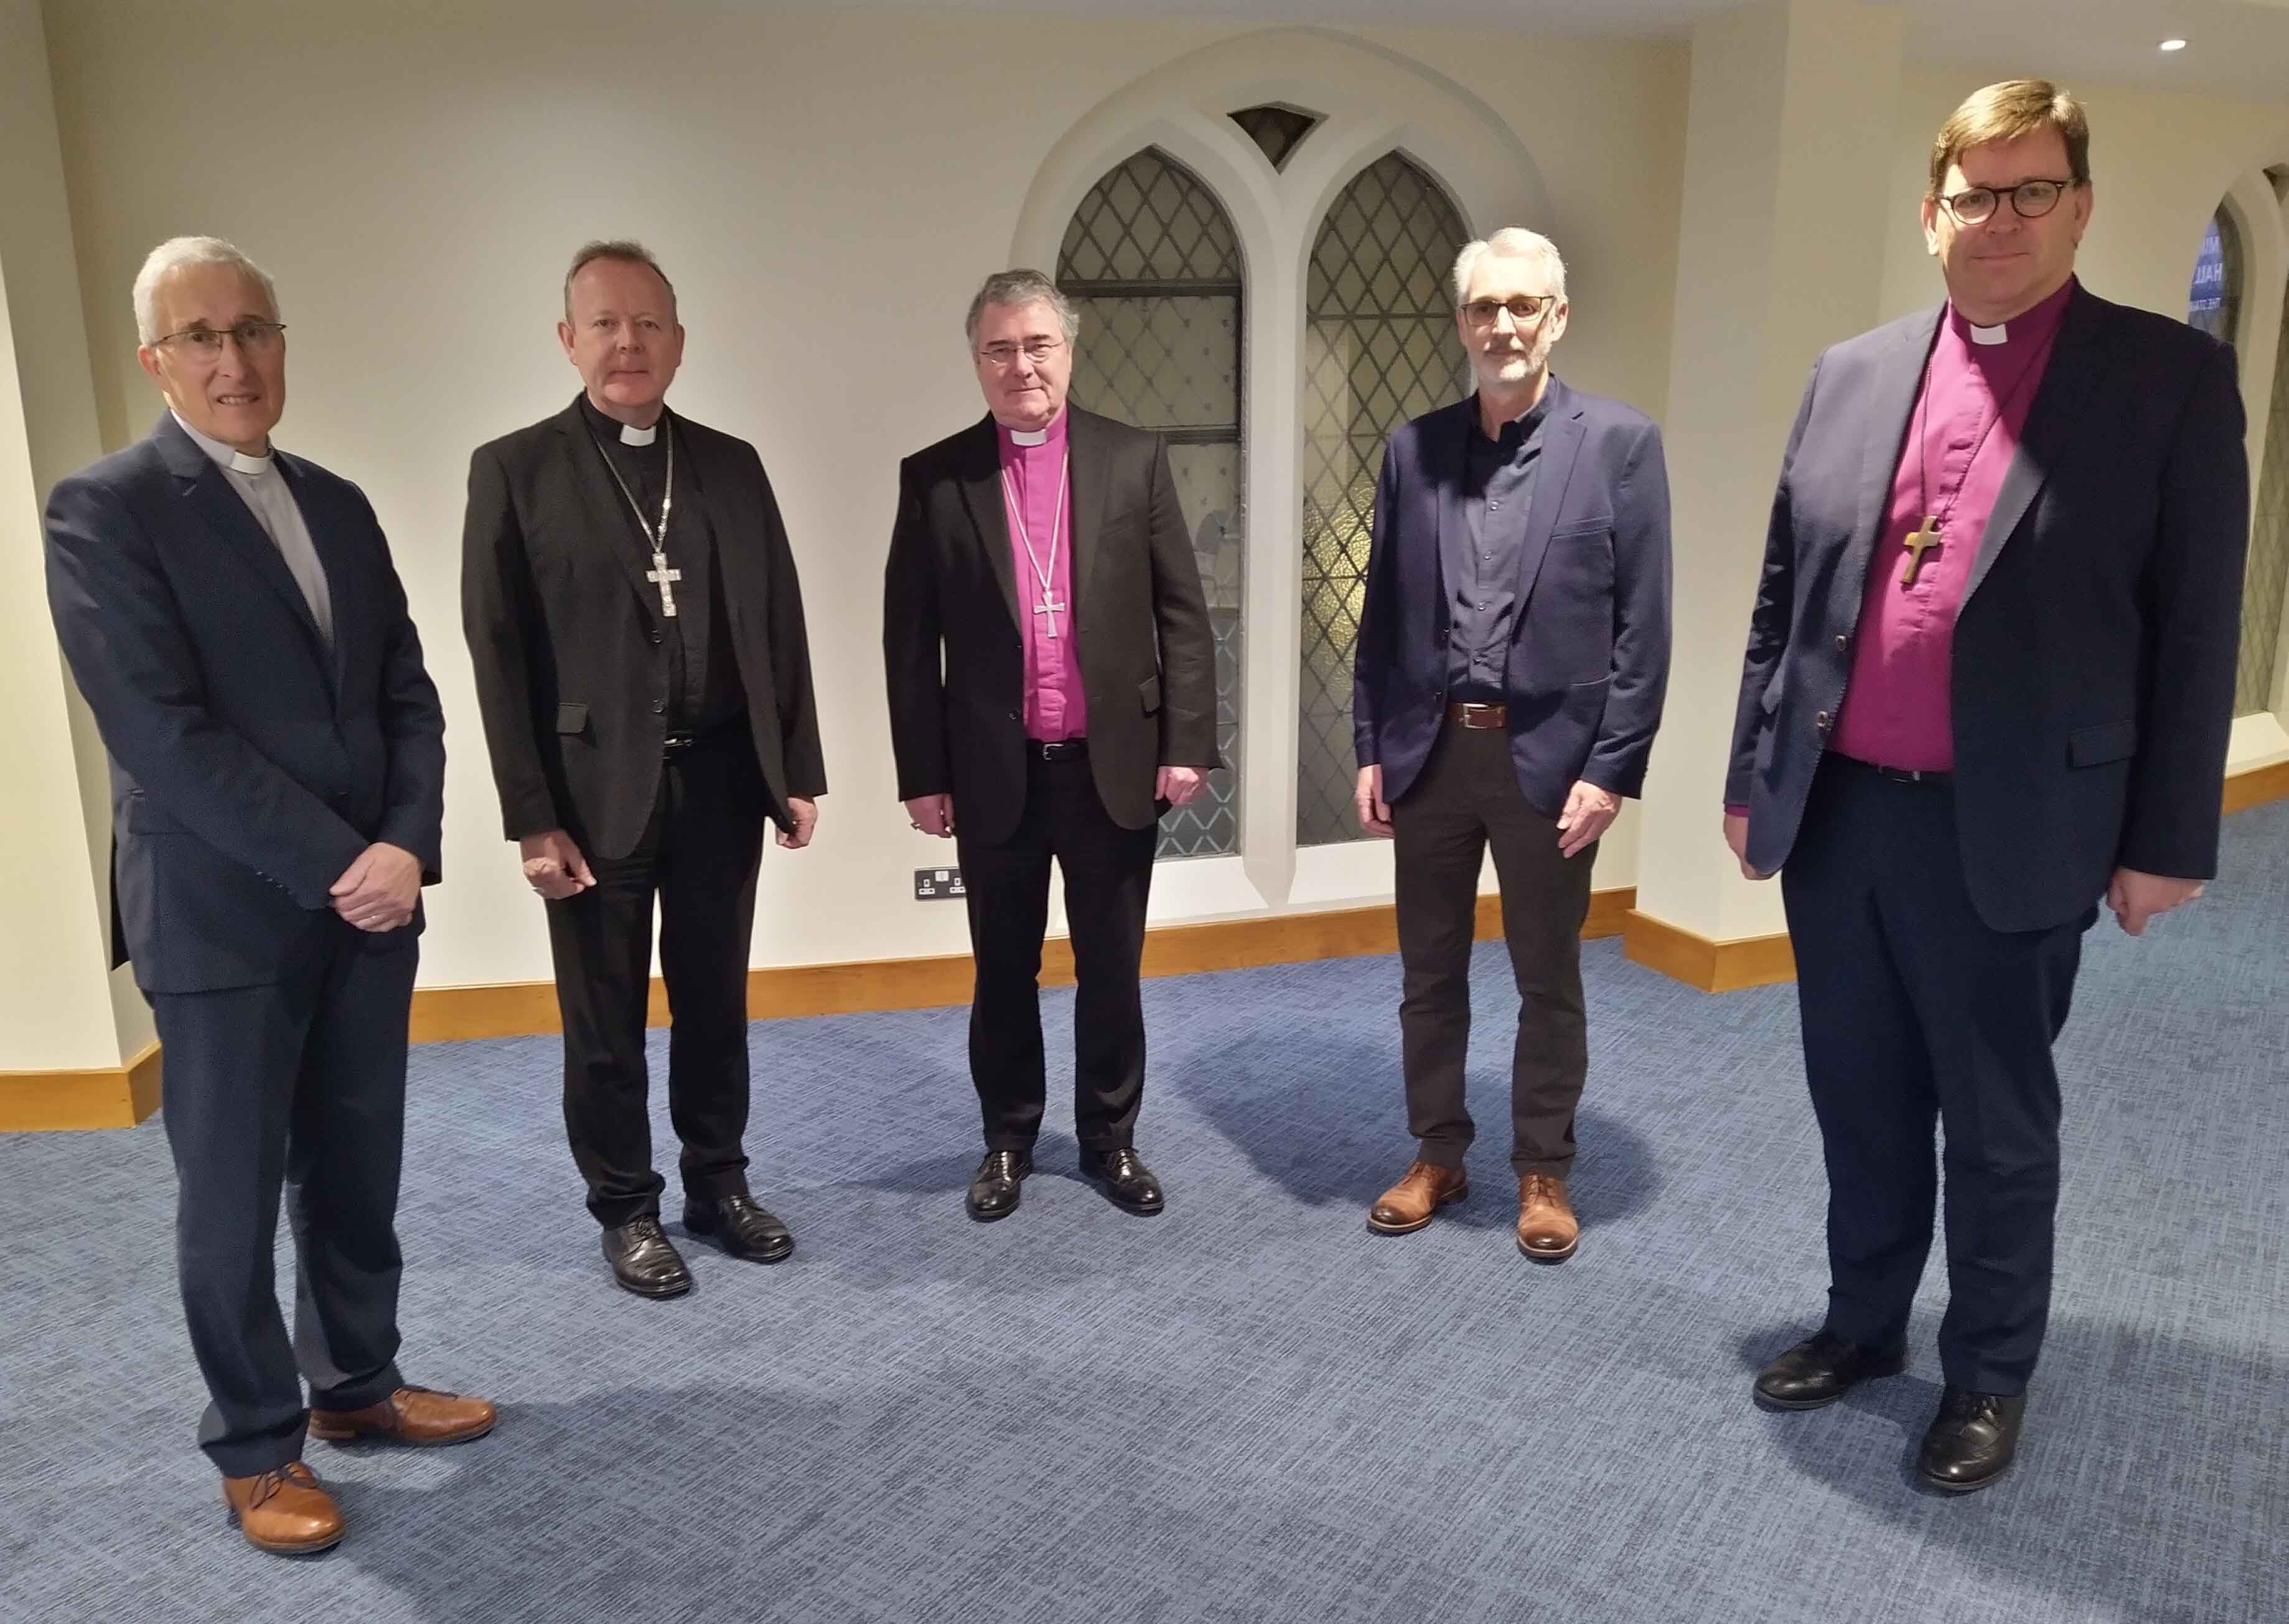 From left: Presbyterian Moderator John Kirkpatrick, Archbishops Eamon Martin and John McDowell, Methodist President David Nixon, and Bishop Andrew Forster (ICC President).